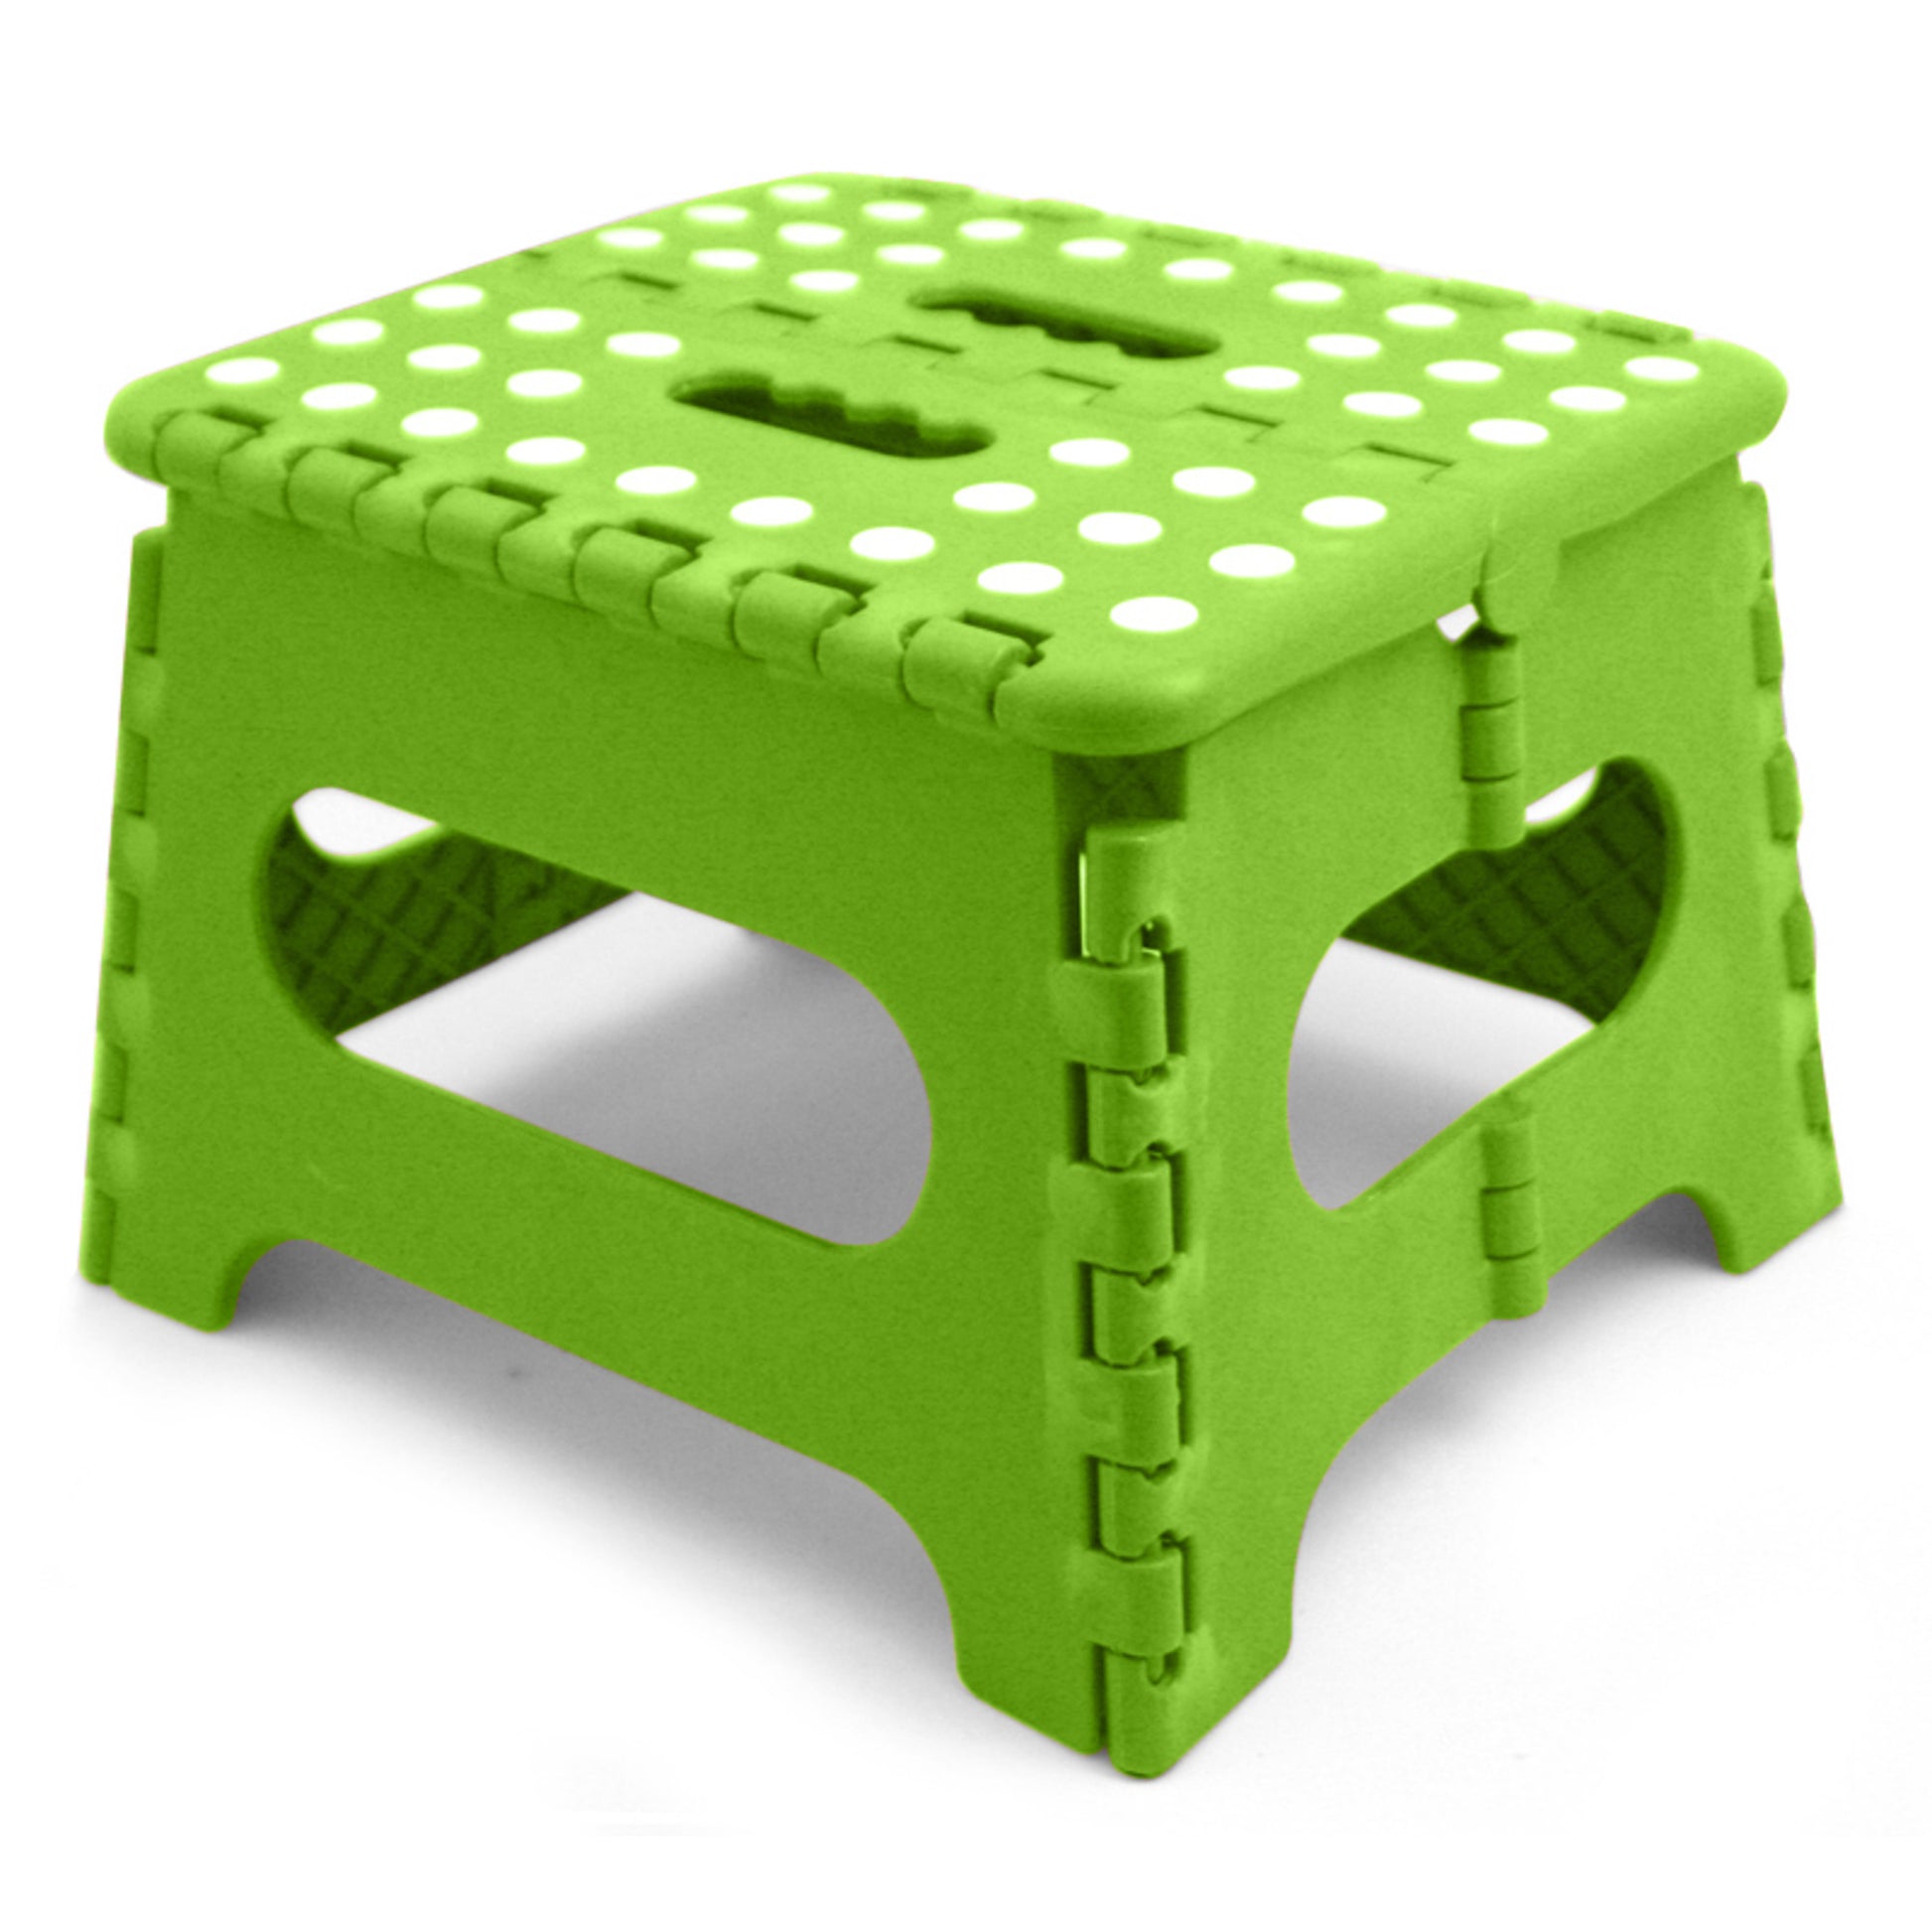 Home Basics Medium Plastic Folding Stool with Non-Slip Dots, Green - Green